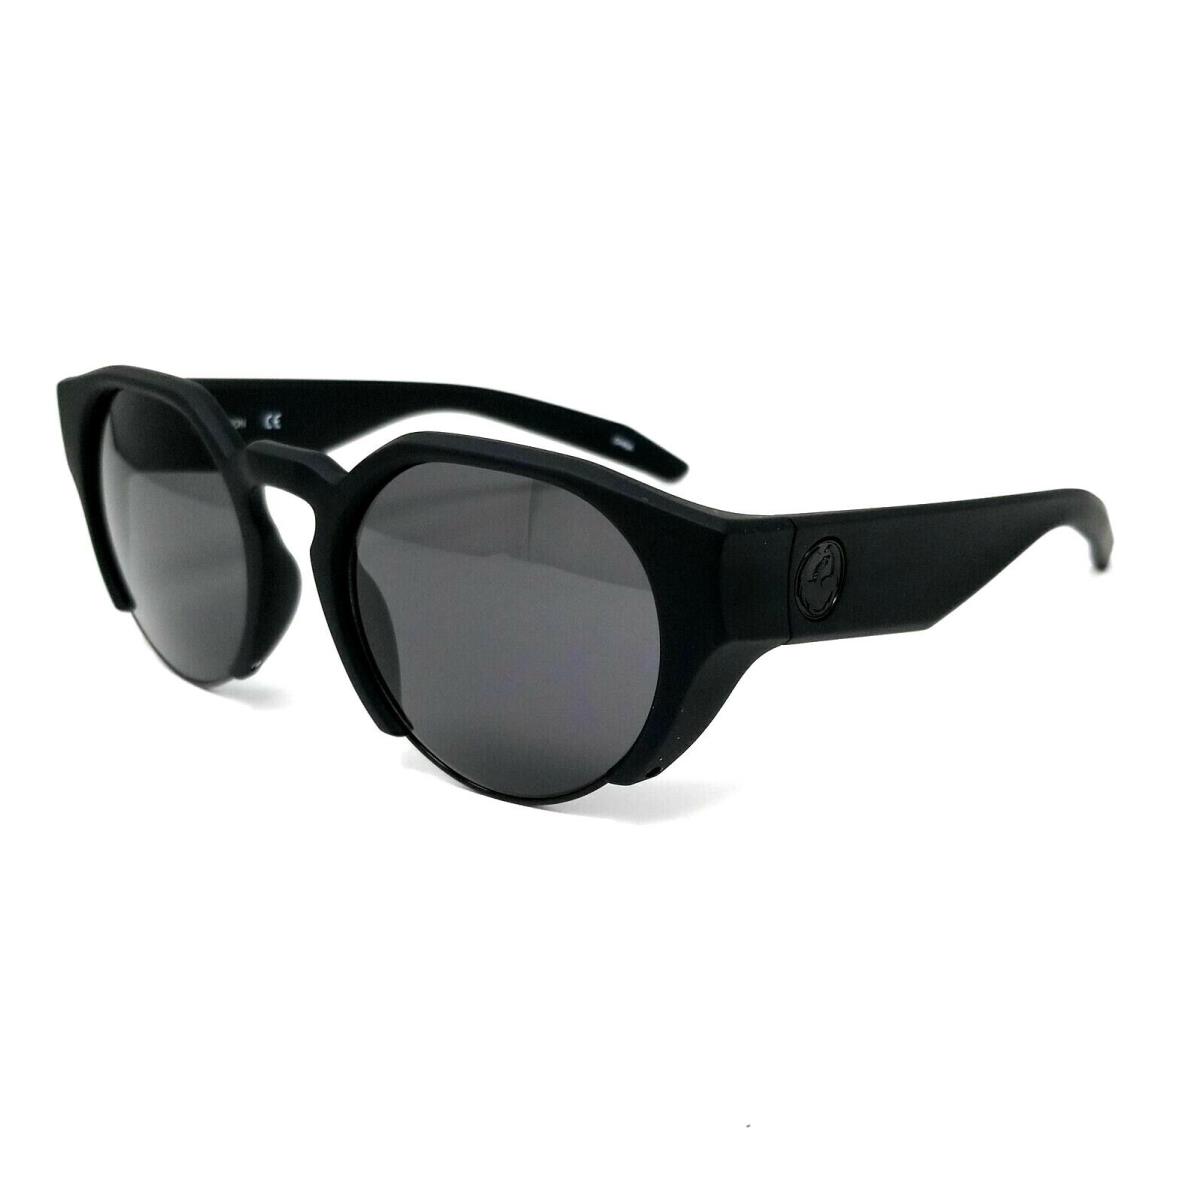 Dragon Compass Matte Black /grey Sunglasses 38353-002-51-20-145 - Frame: Black, Lens: Gray